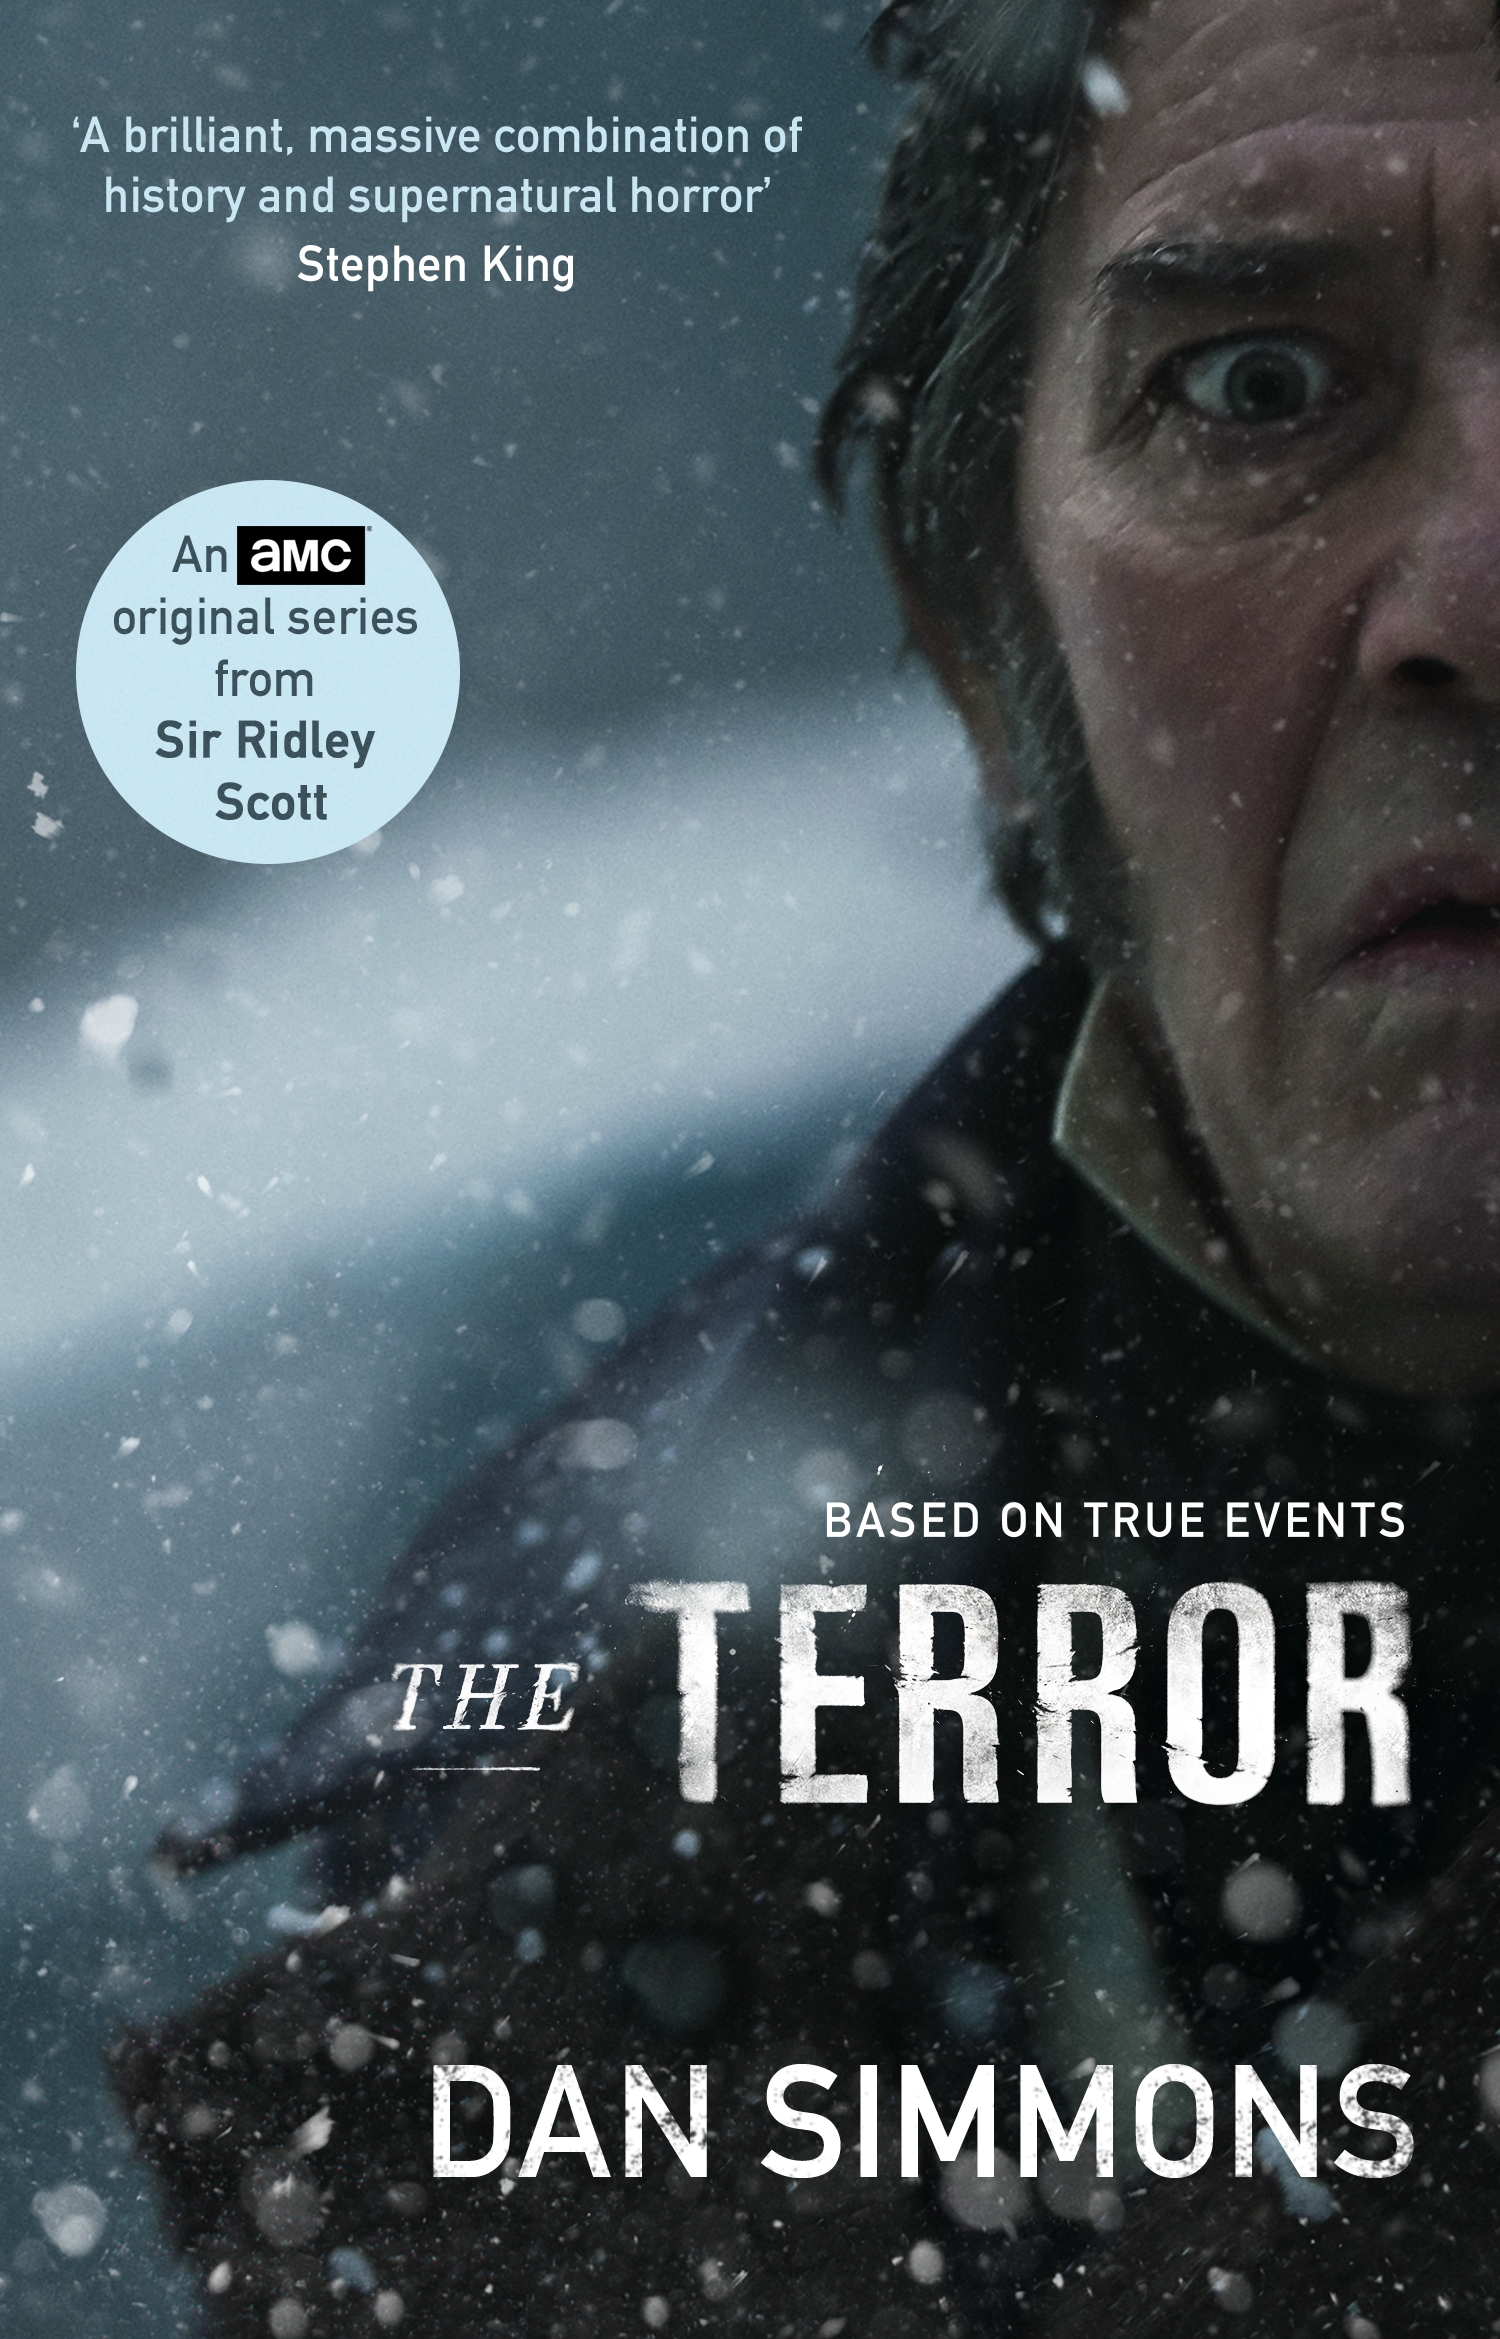 The Terror (Film Tie In)